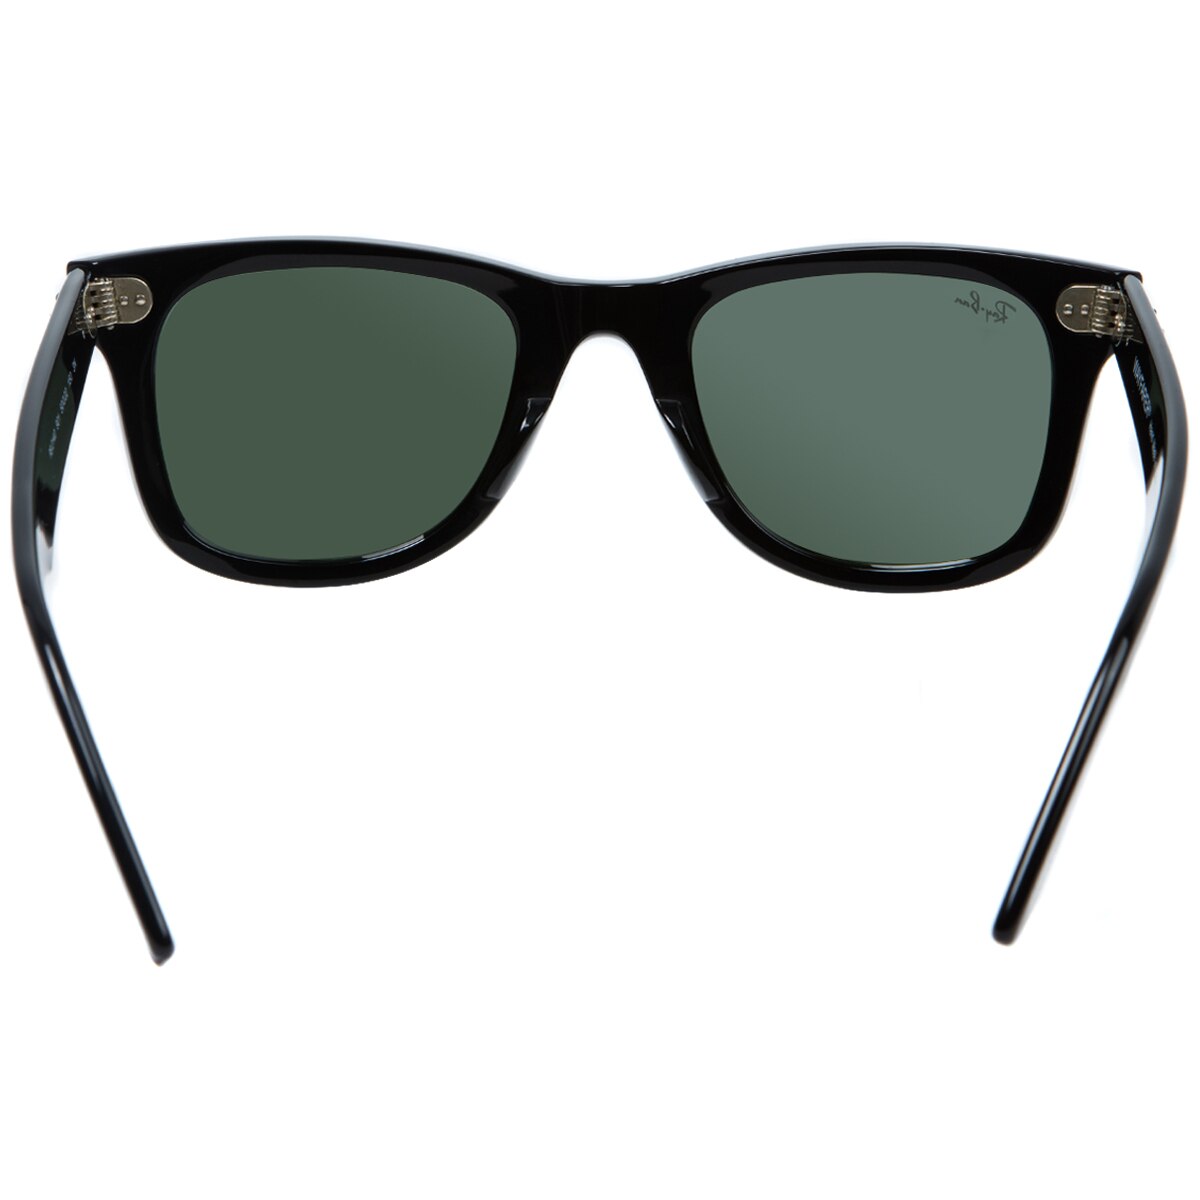 RAYBAN Sunglasses Wayfarer - Black